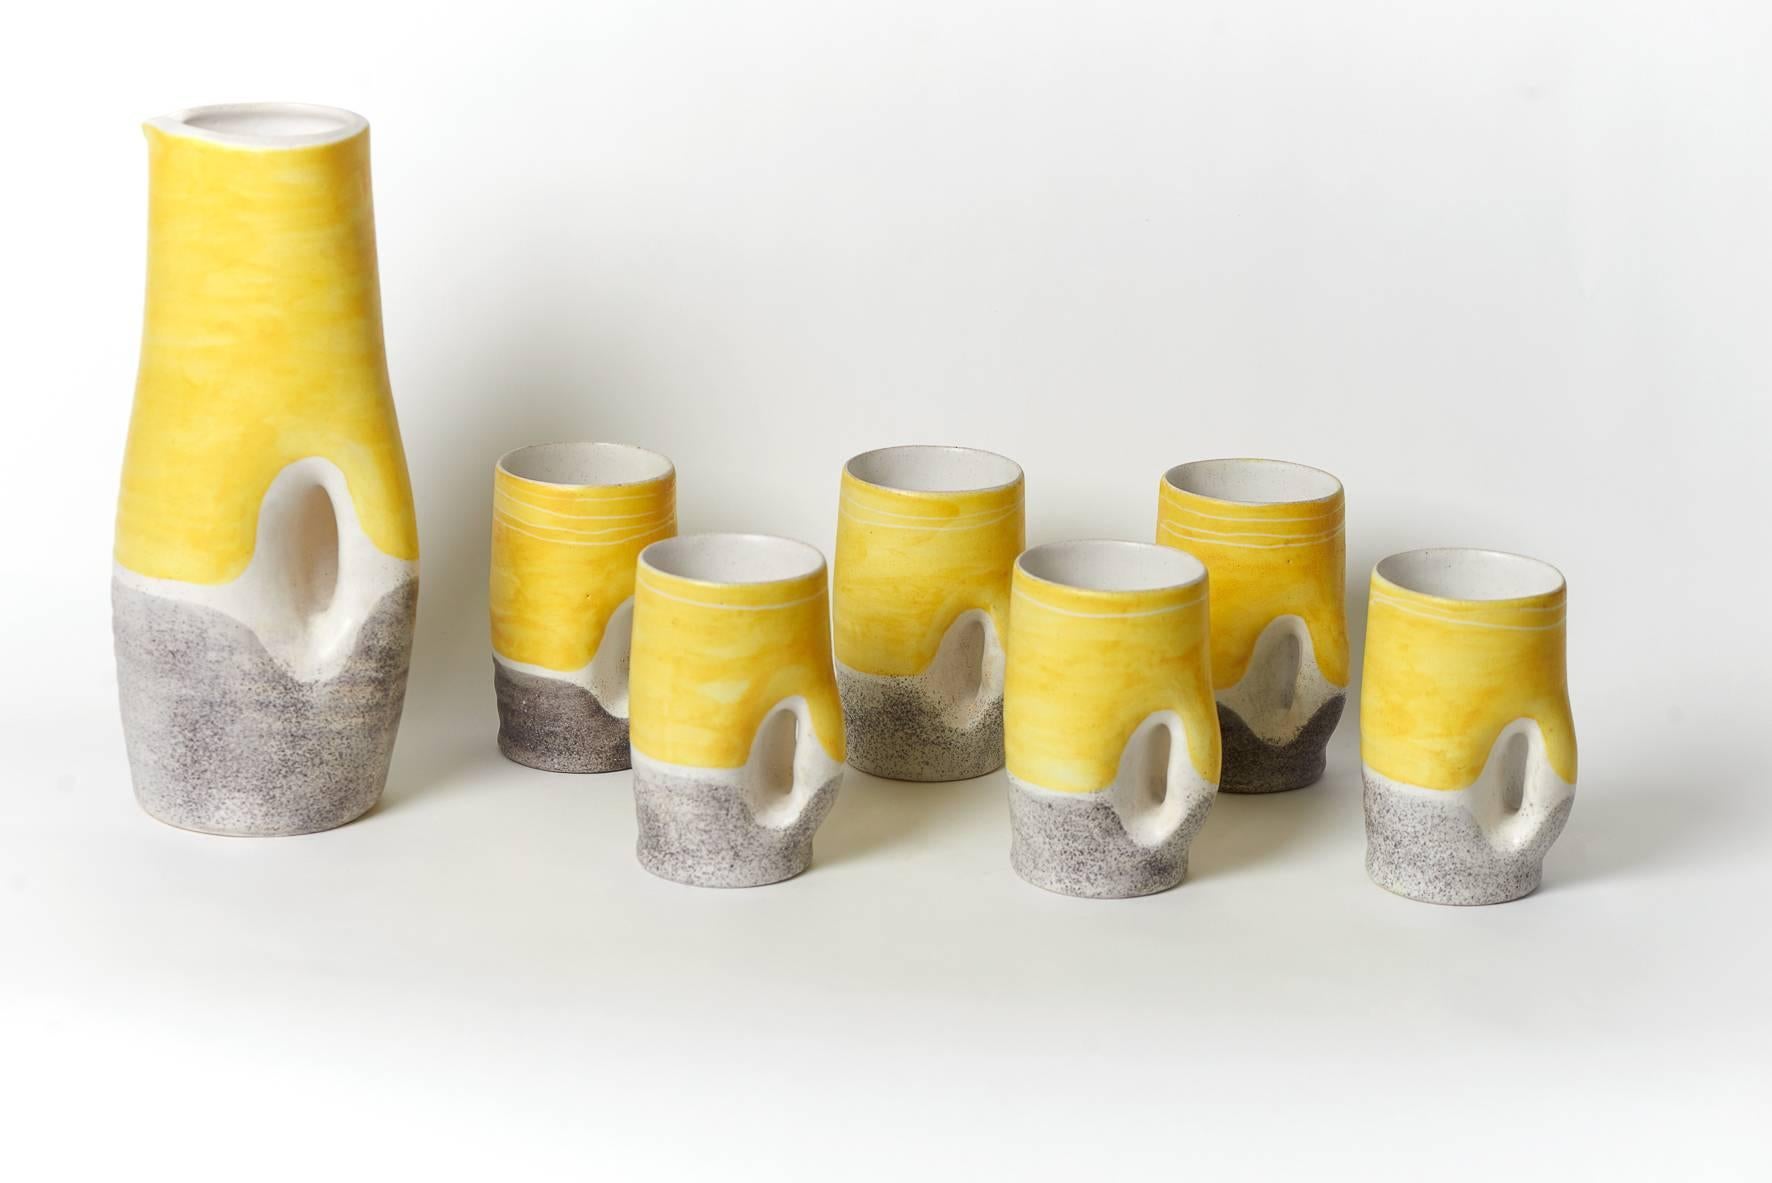 Yellow and grey glazed stoneware soft drink set by French ceramist Mado Jolain
Pitcher Signed MJ
1950s

Dimensions 
Pitcher H 33 cm X L 15 cm
Glass H 15 cm X L 10 cm (X 6).